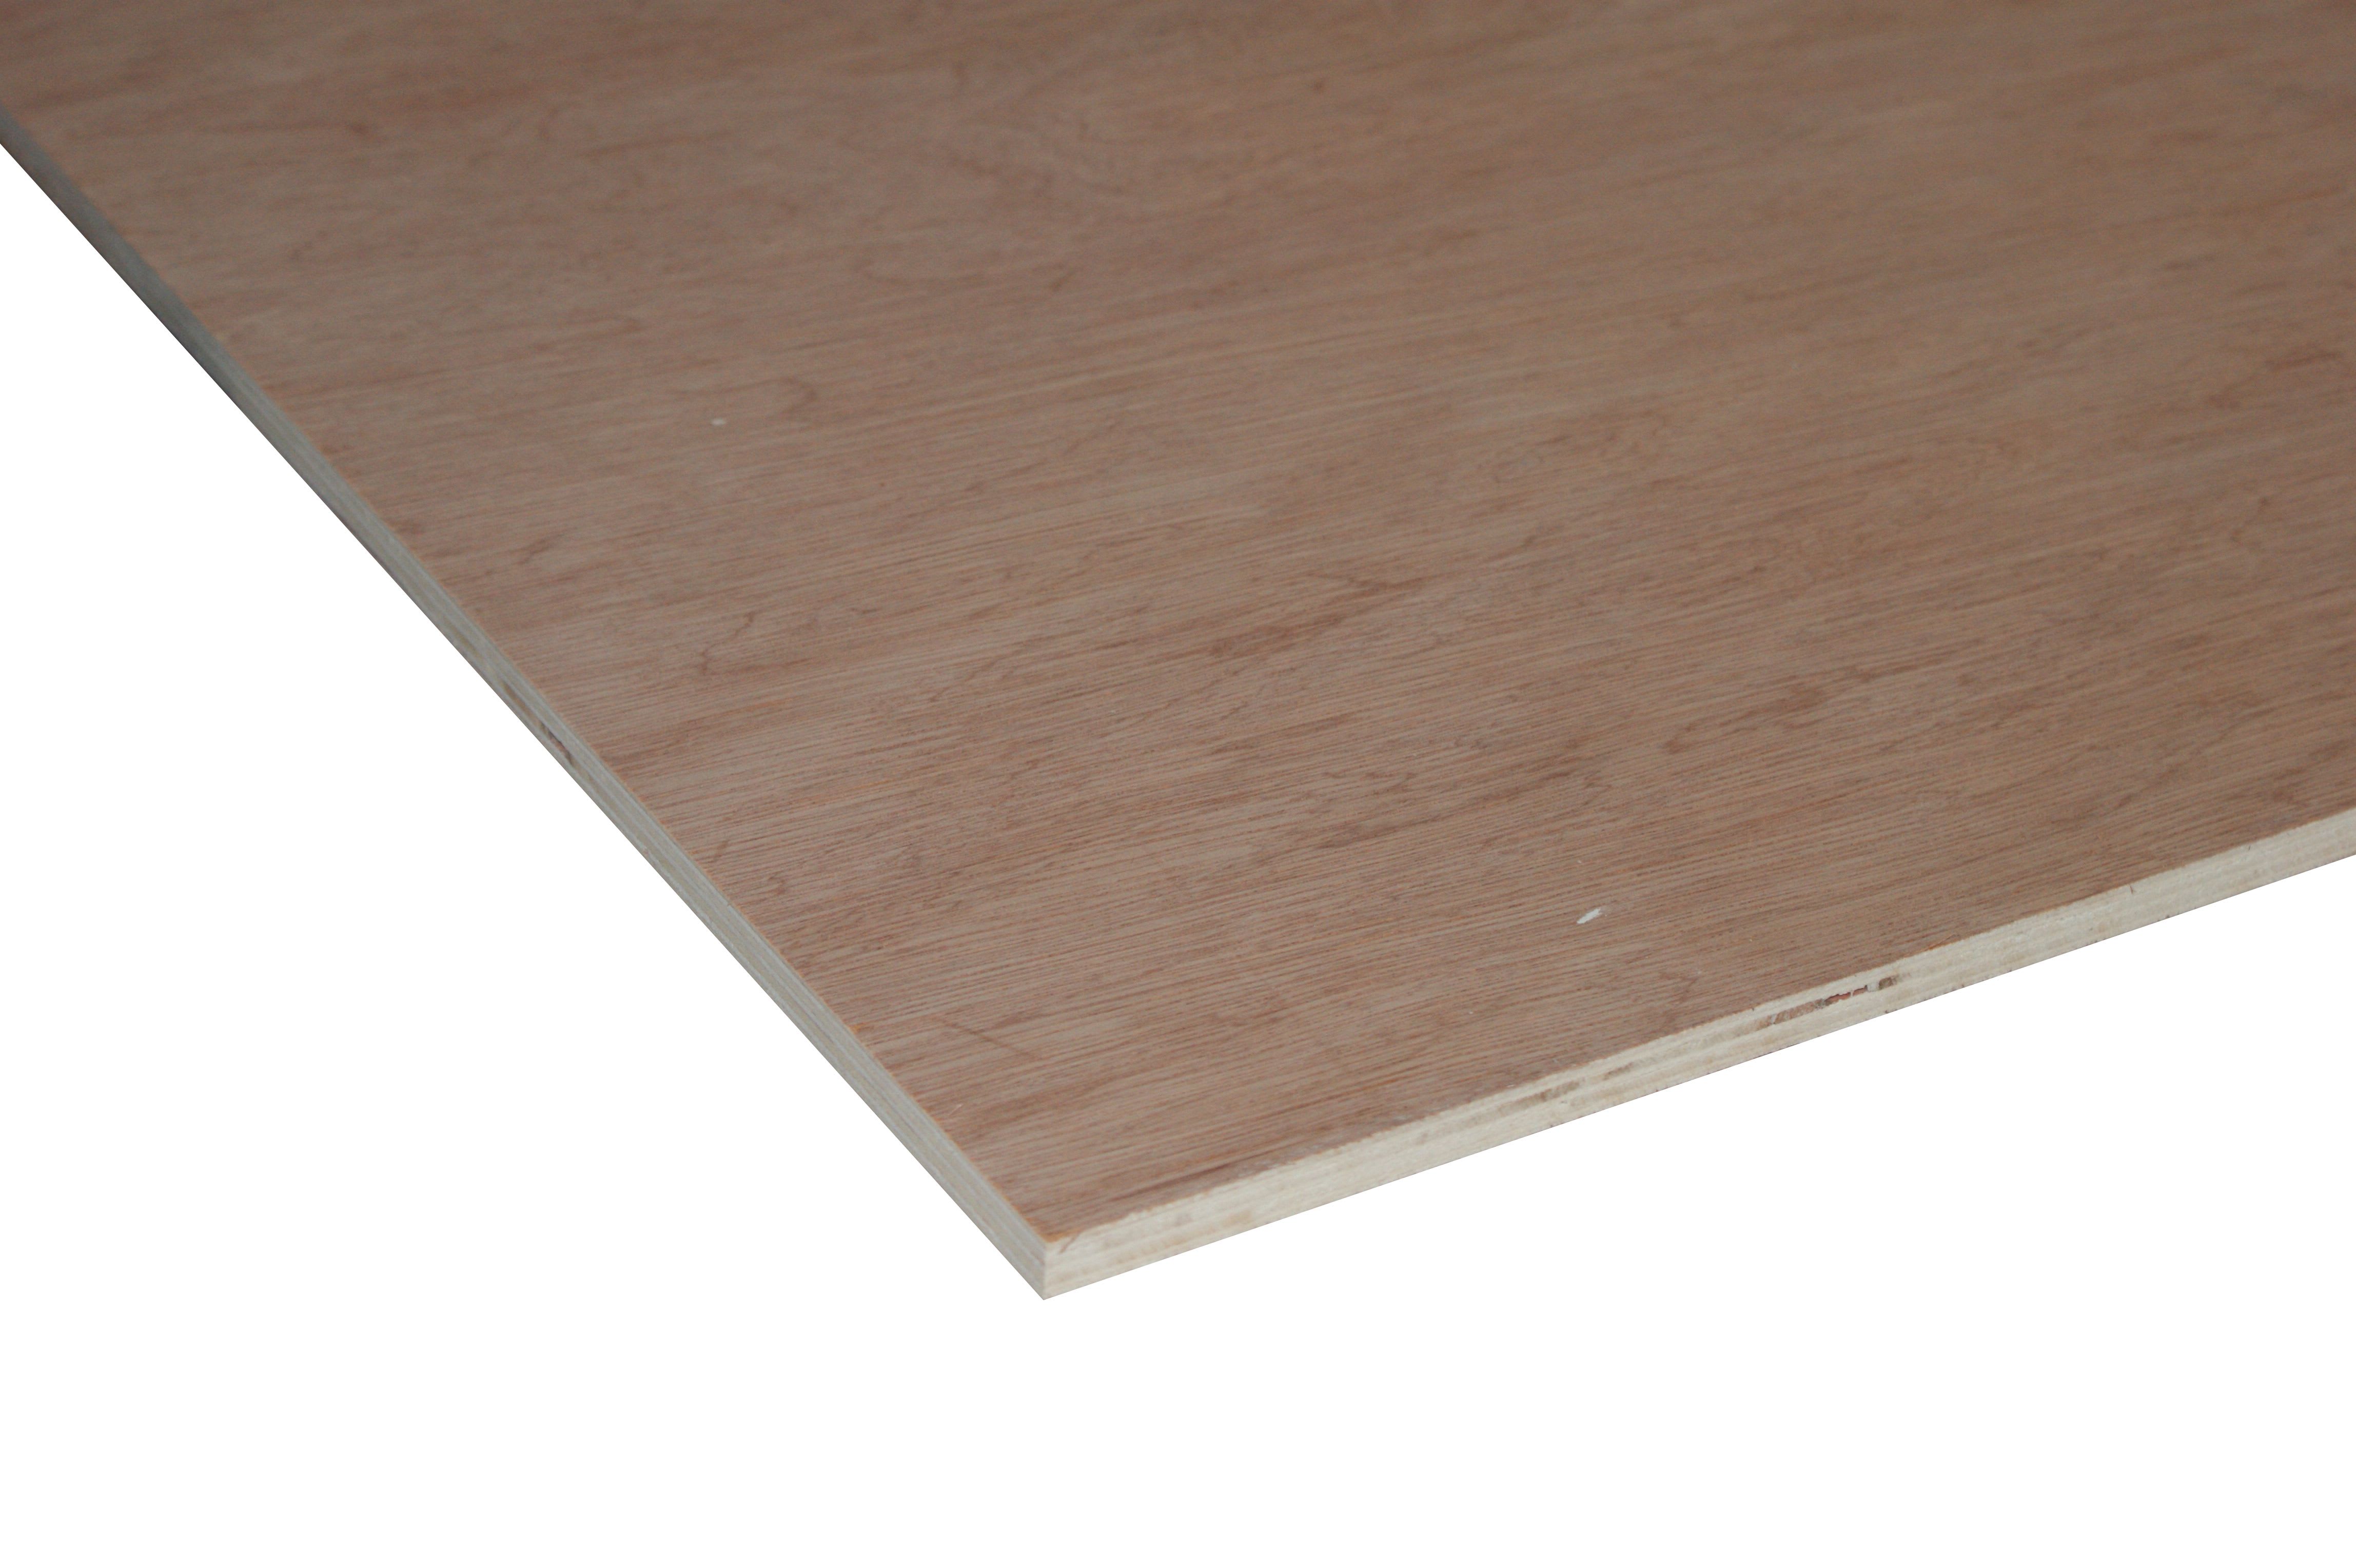 Non-Structural Hardwood Plywood Sheet - 12 x 606